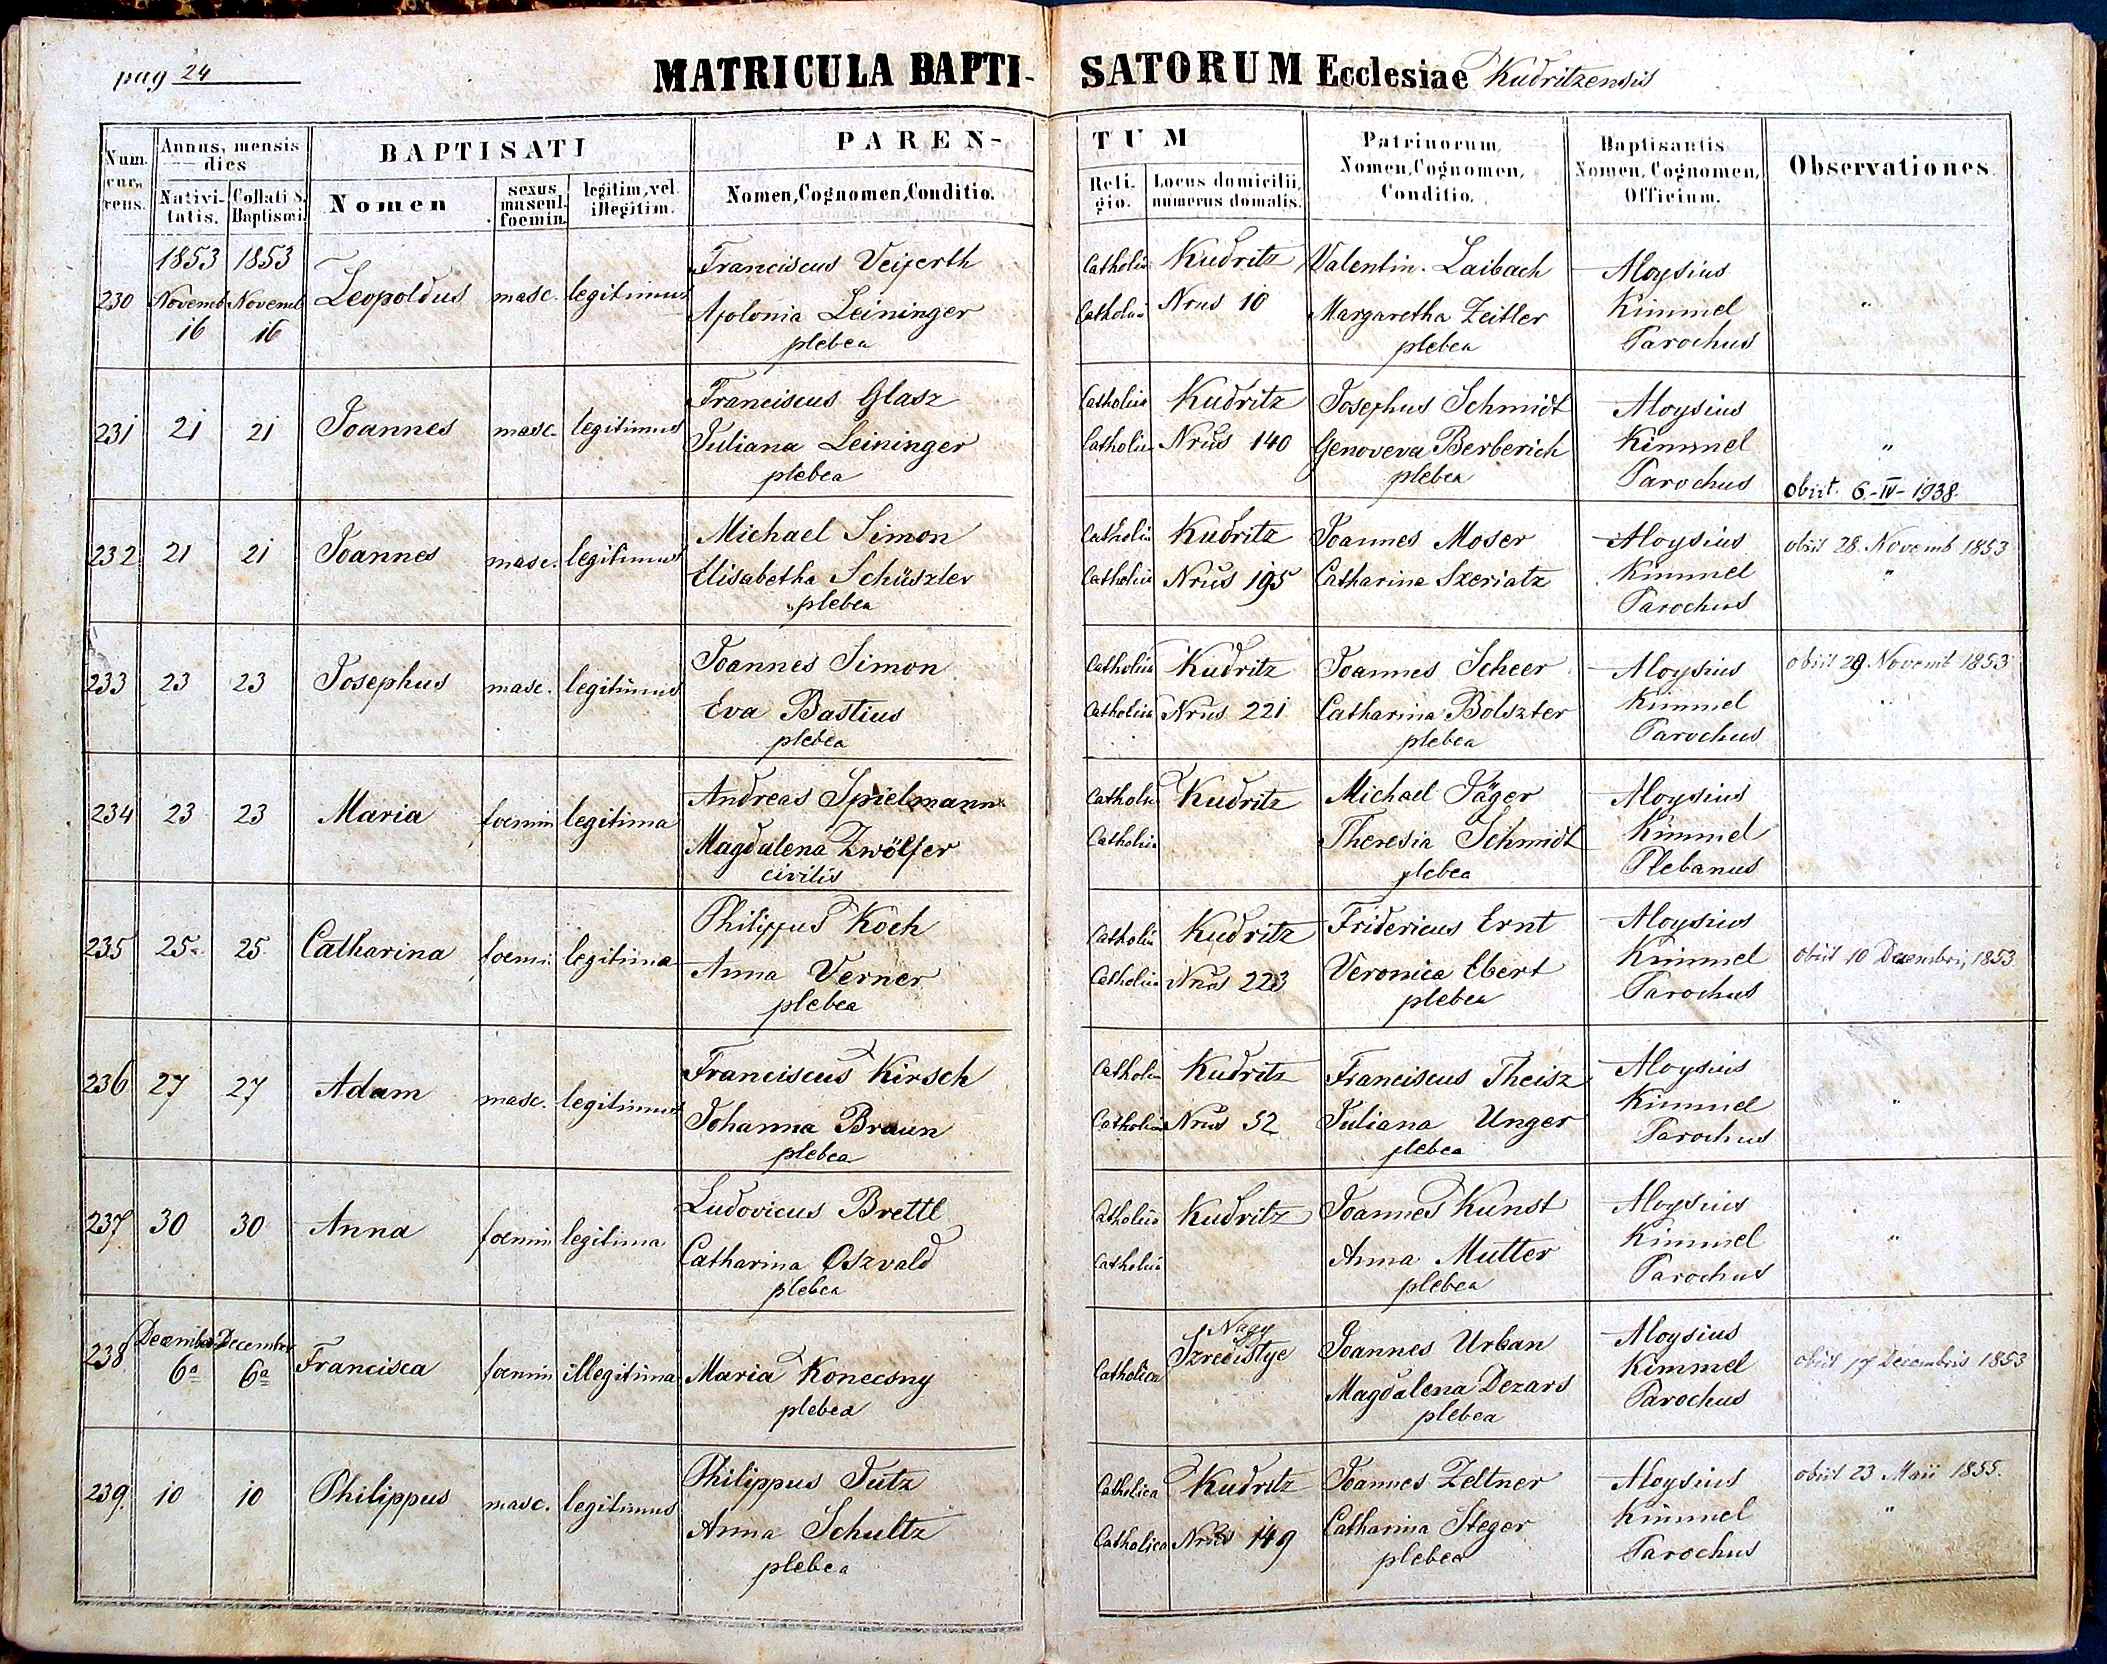 images/church_records/BIRTHS/1852-1870B/024